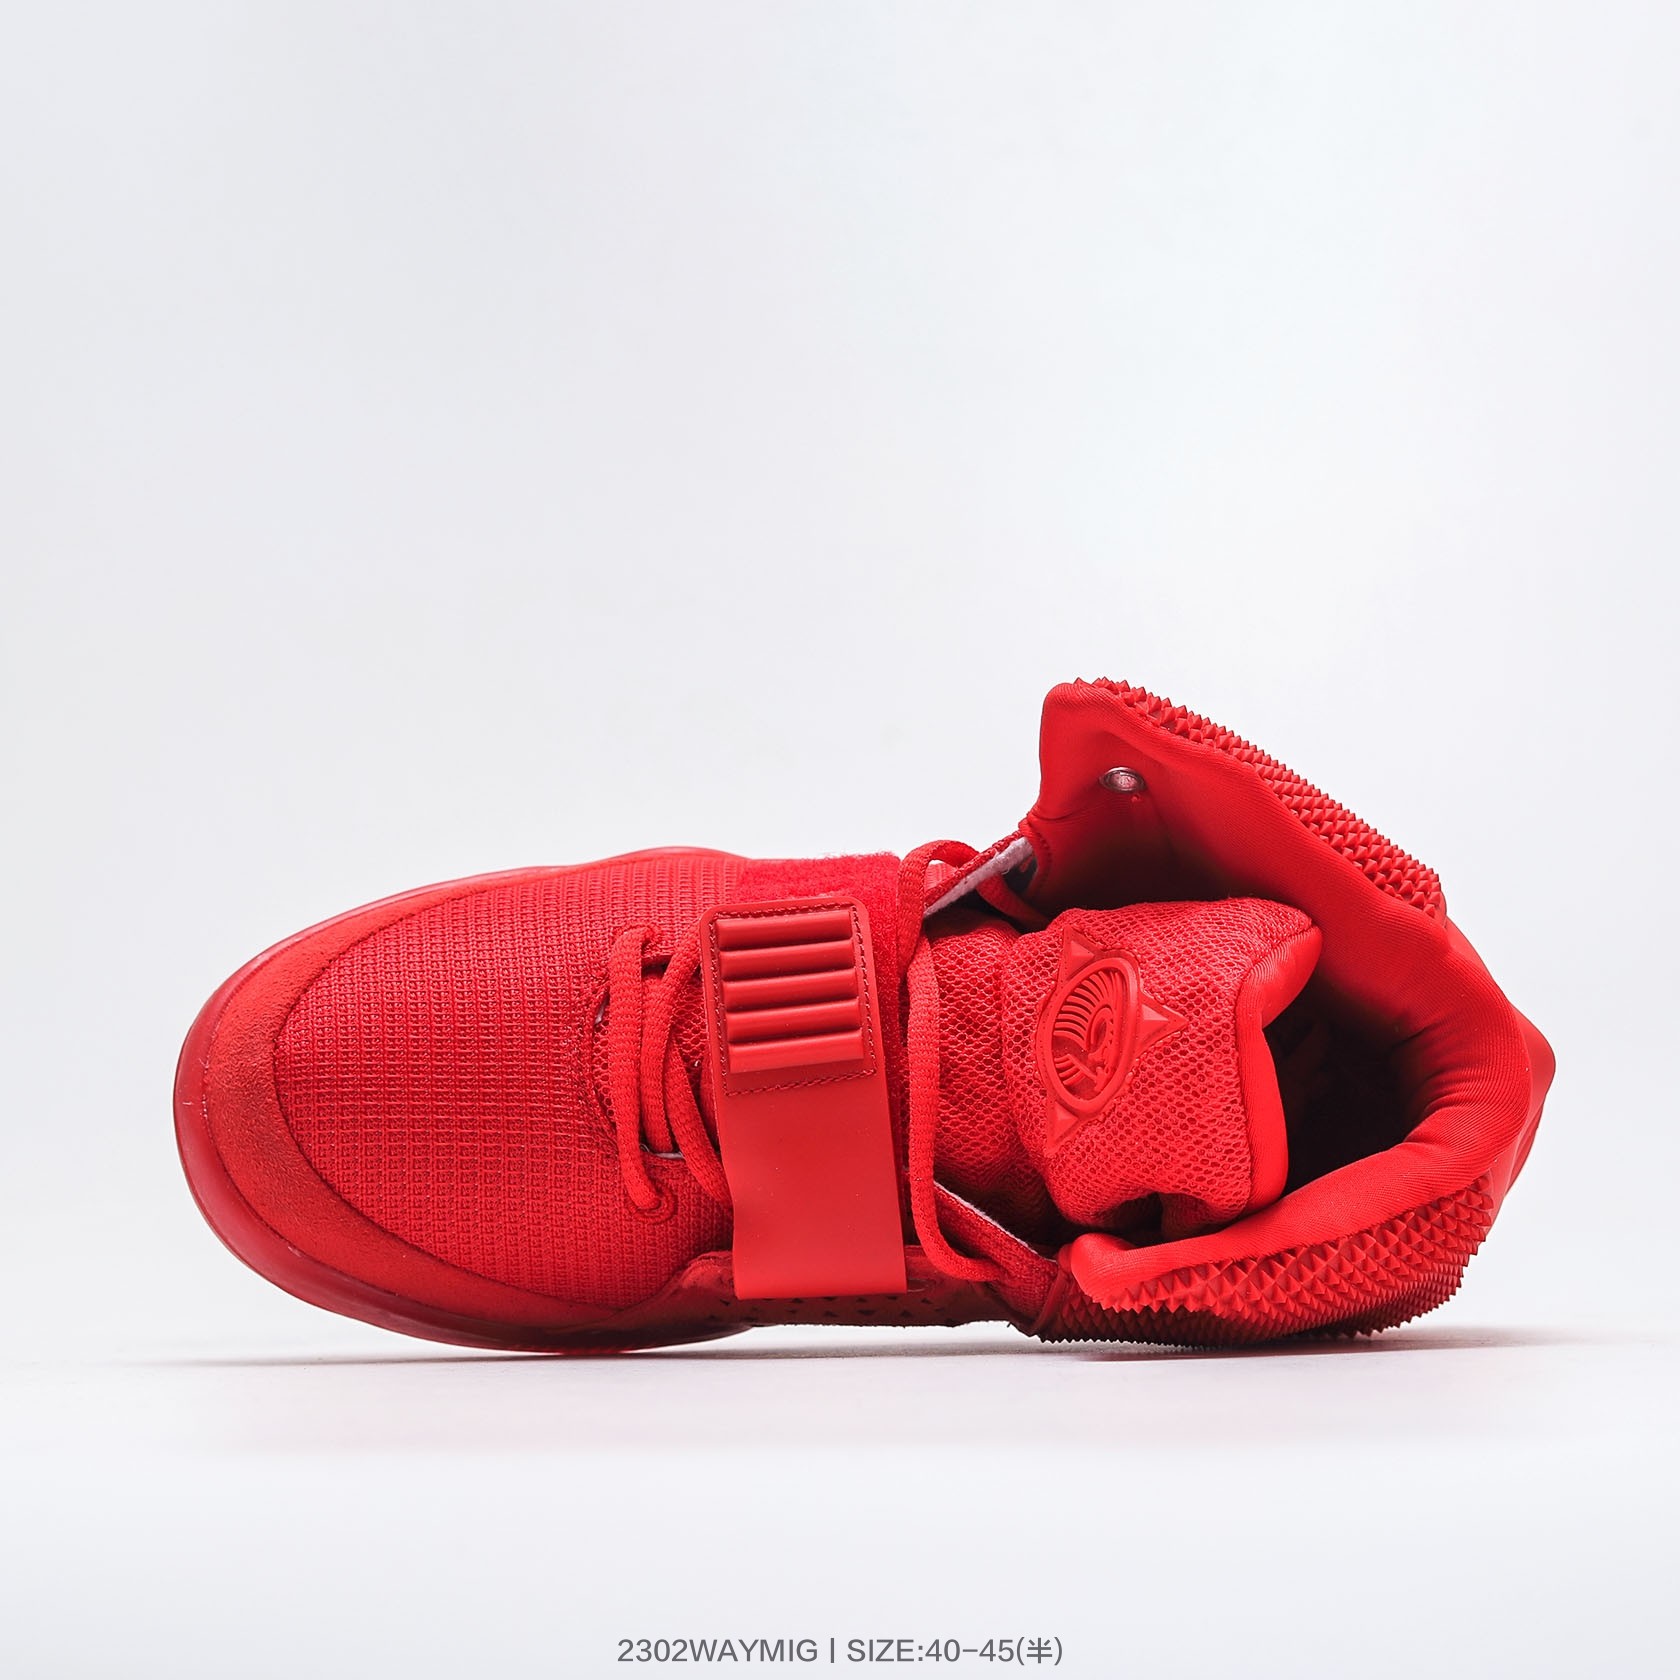 Nike Air Yeezy 2 Red October 508214-660 - Sneaker Bar Detroit